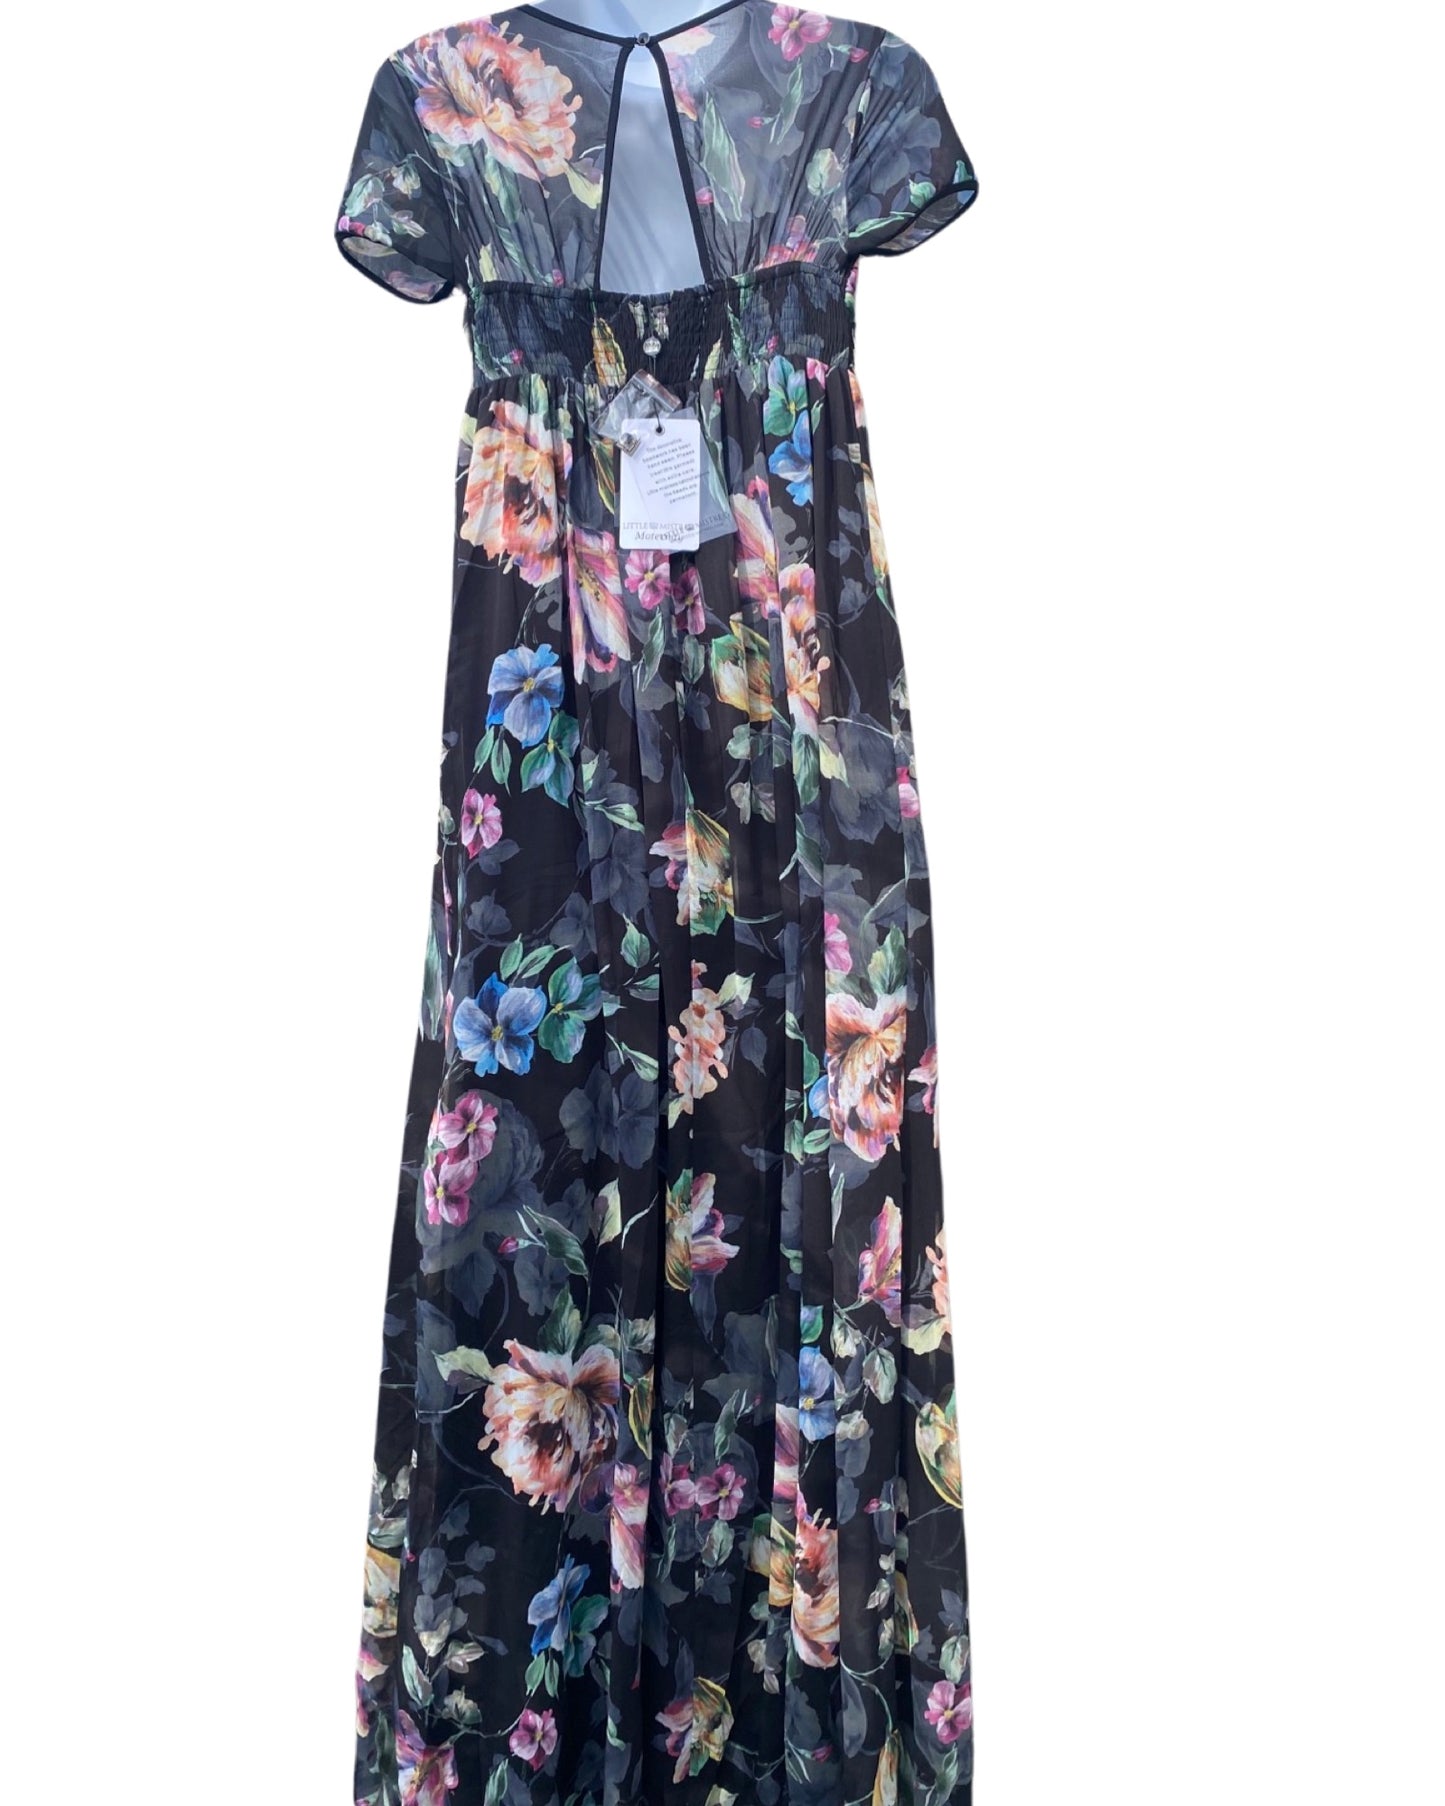 Little Mistress floral maternity maxi dress ( size 12)